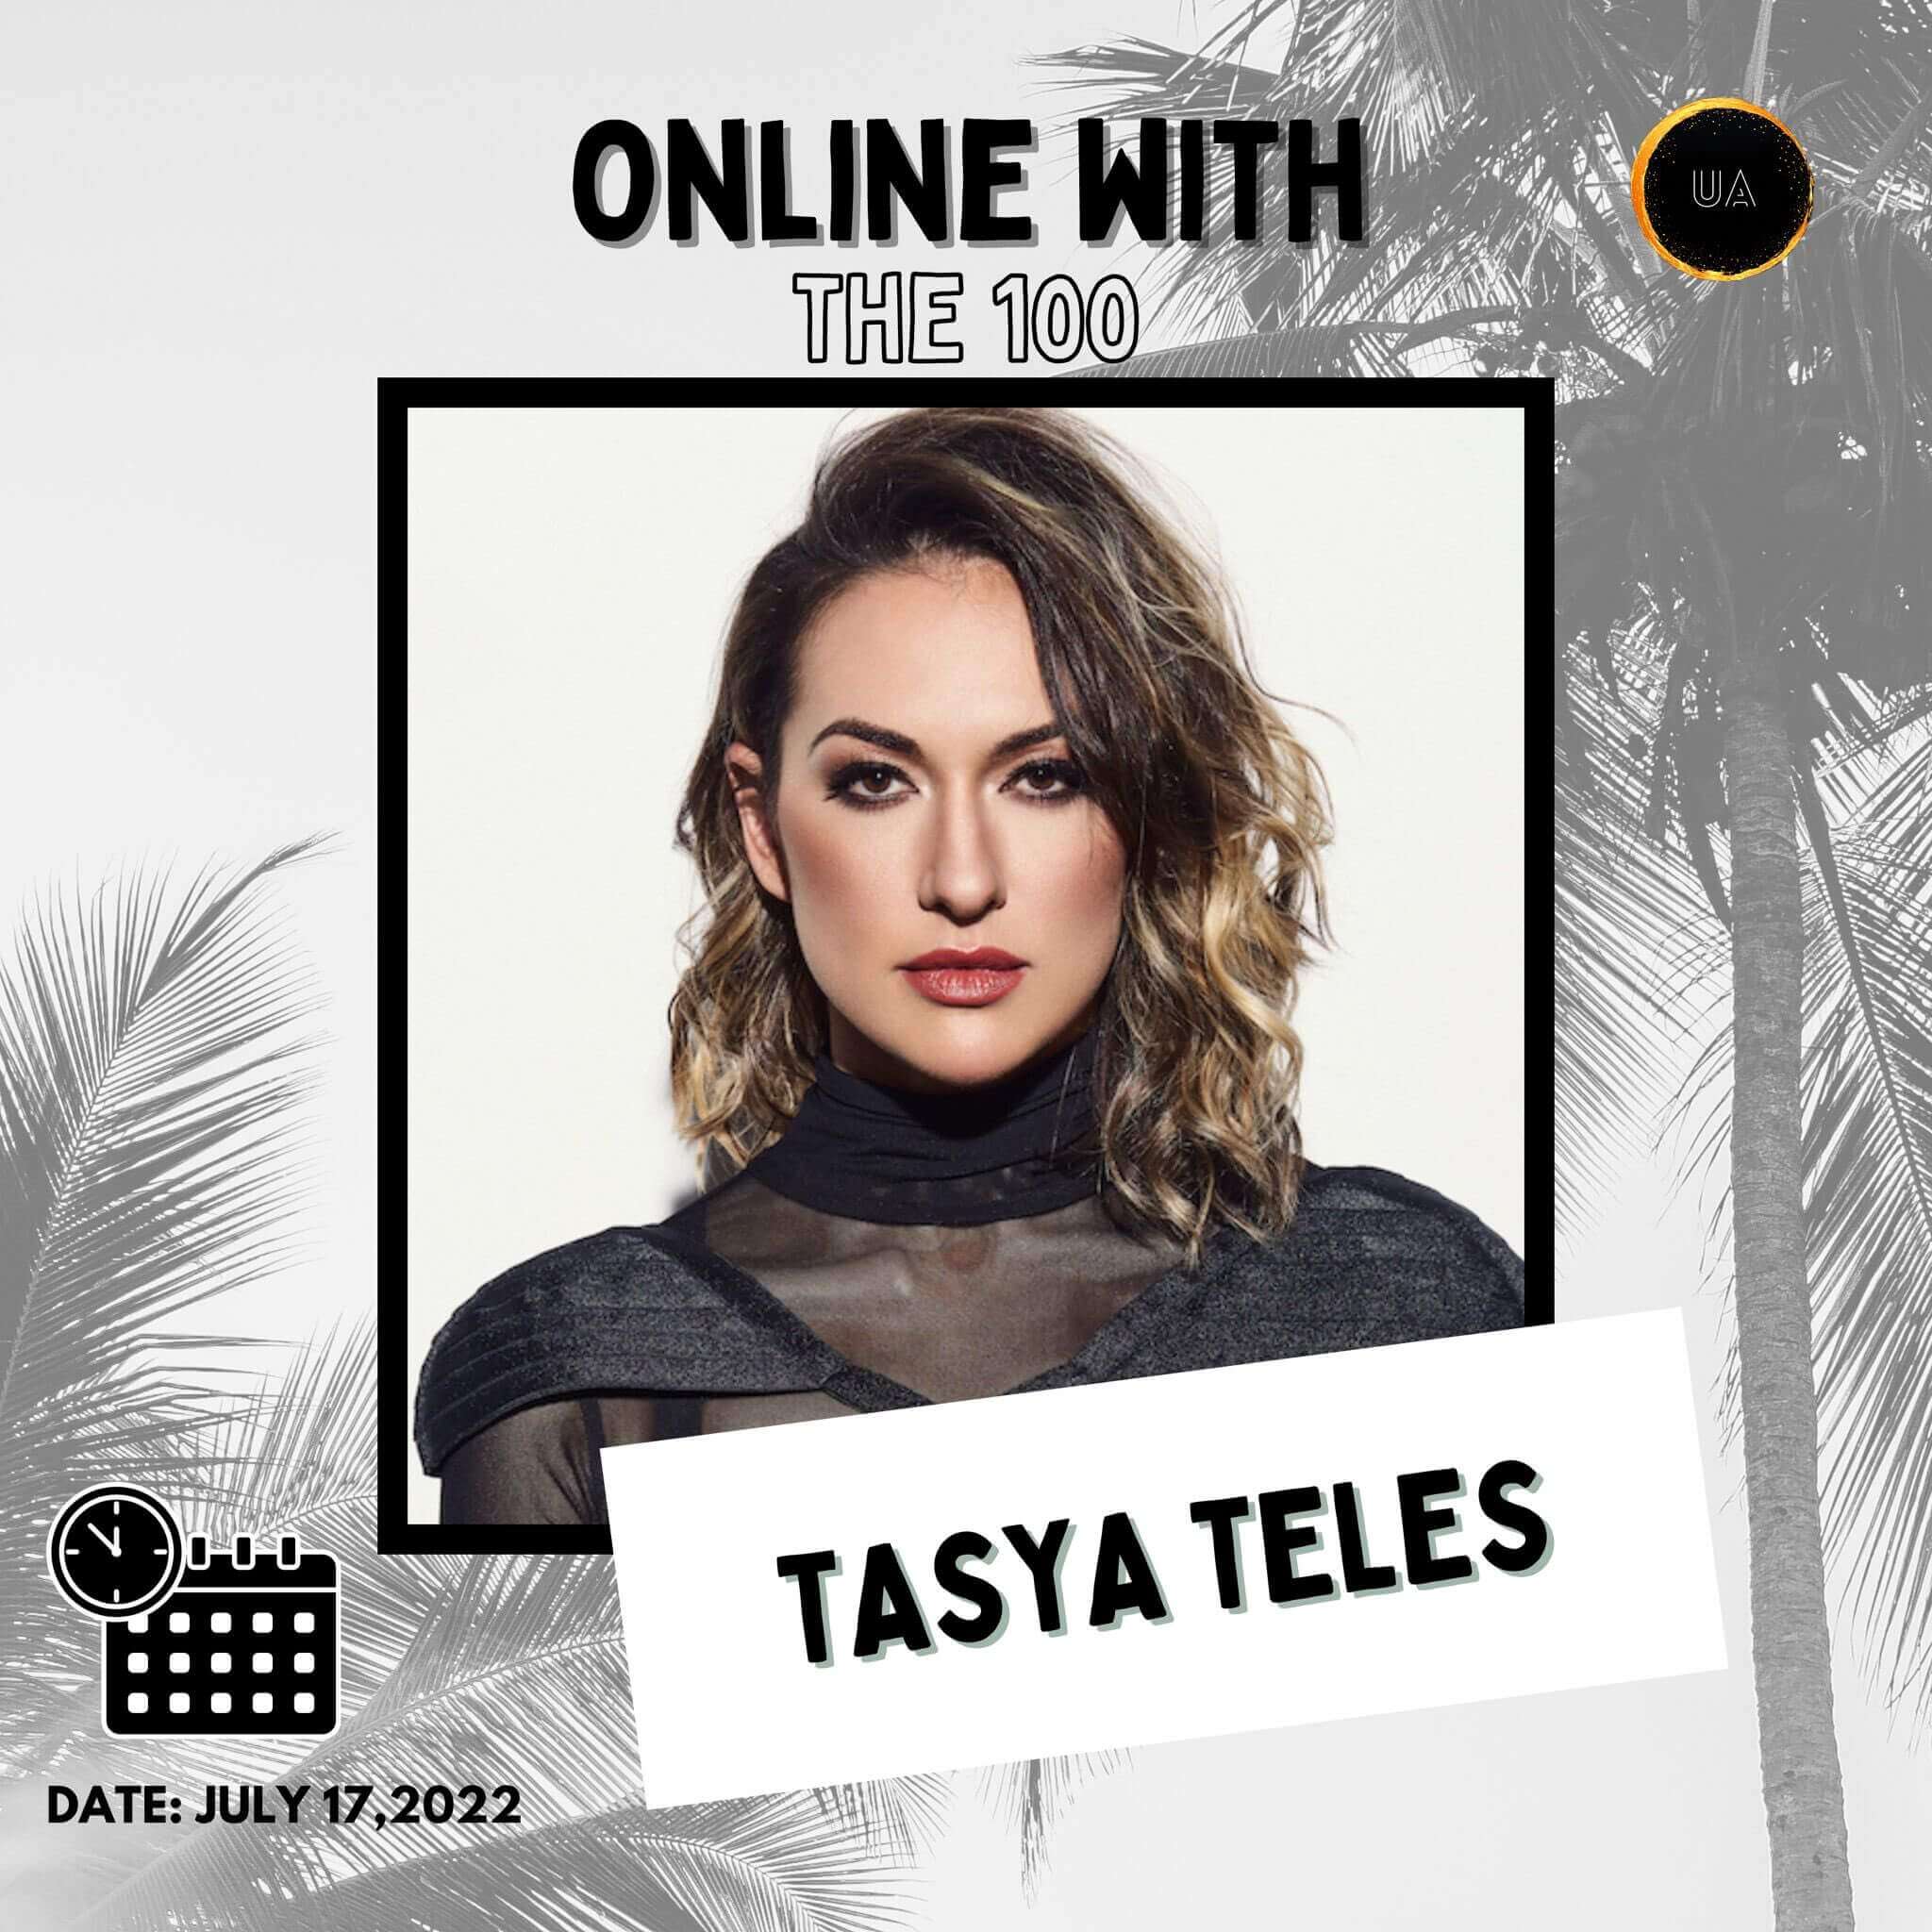 Online with Tasya Teles